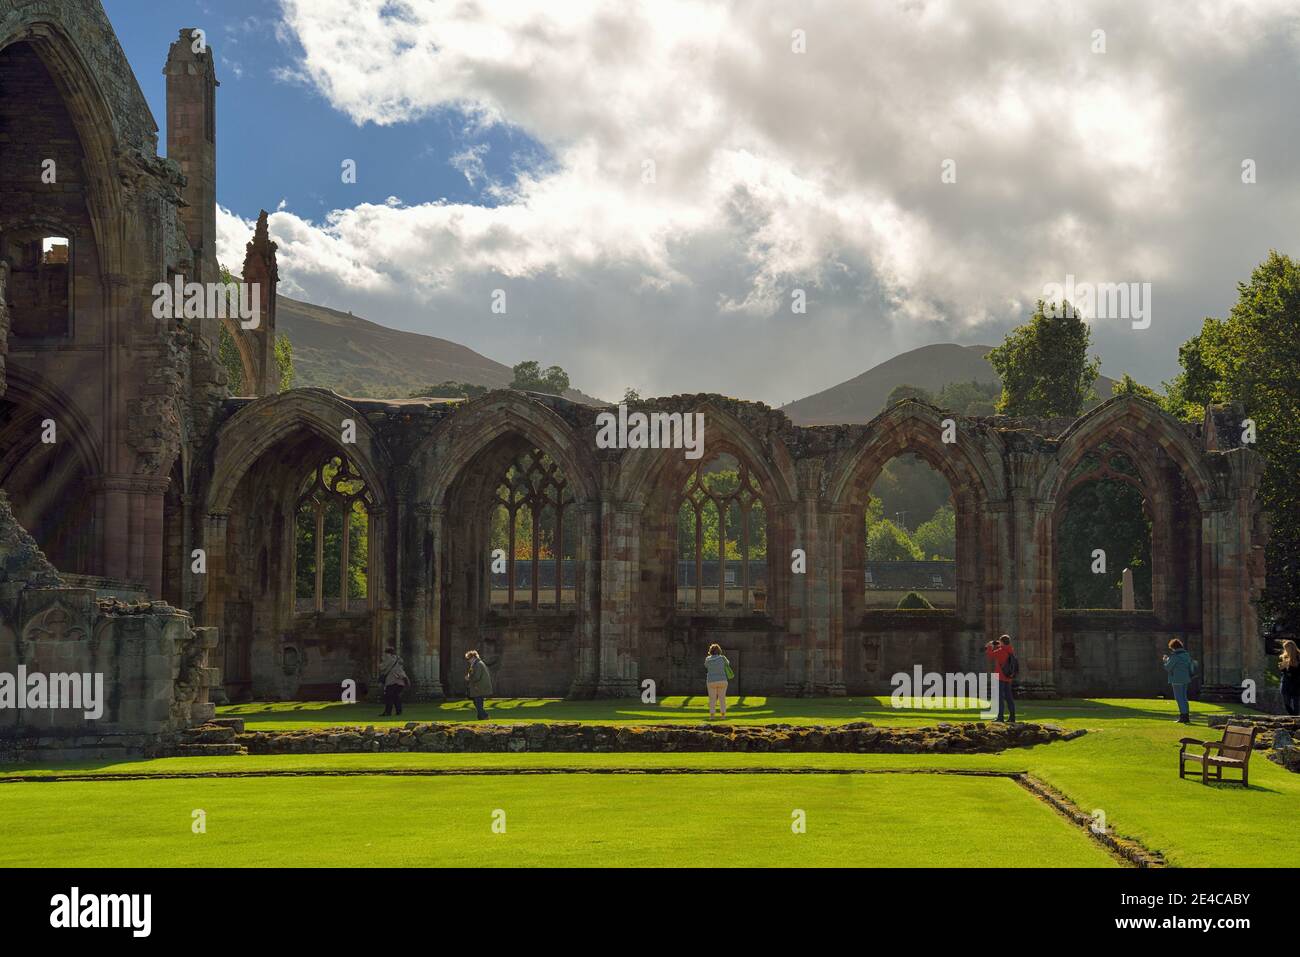 Ruins of Elgin Cathedral, Moray, Scotland, United Kingdom, Europe, Elgin, Moray, Scotland, United Kingdom, British Isles Stock Photo